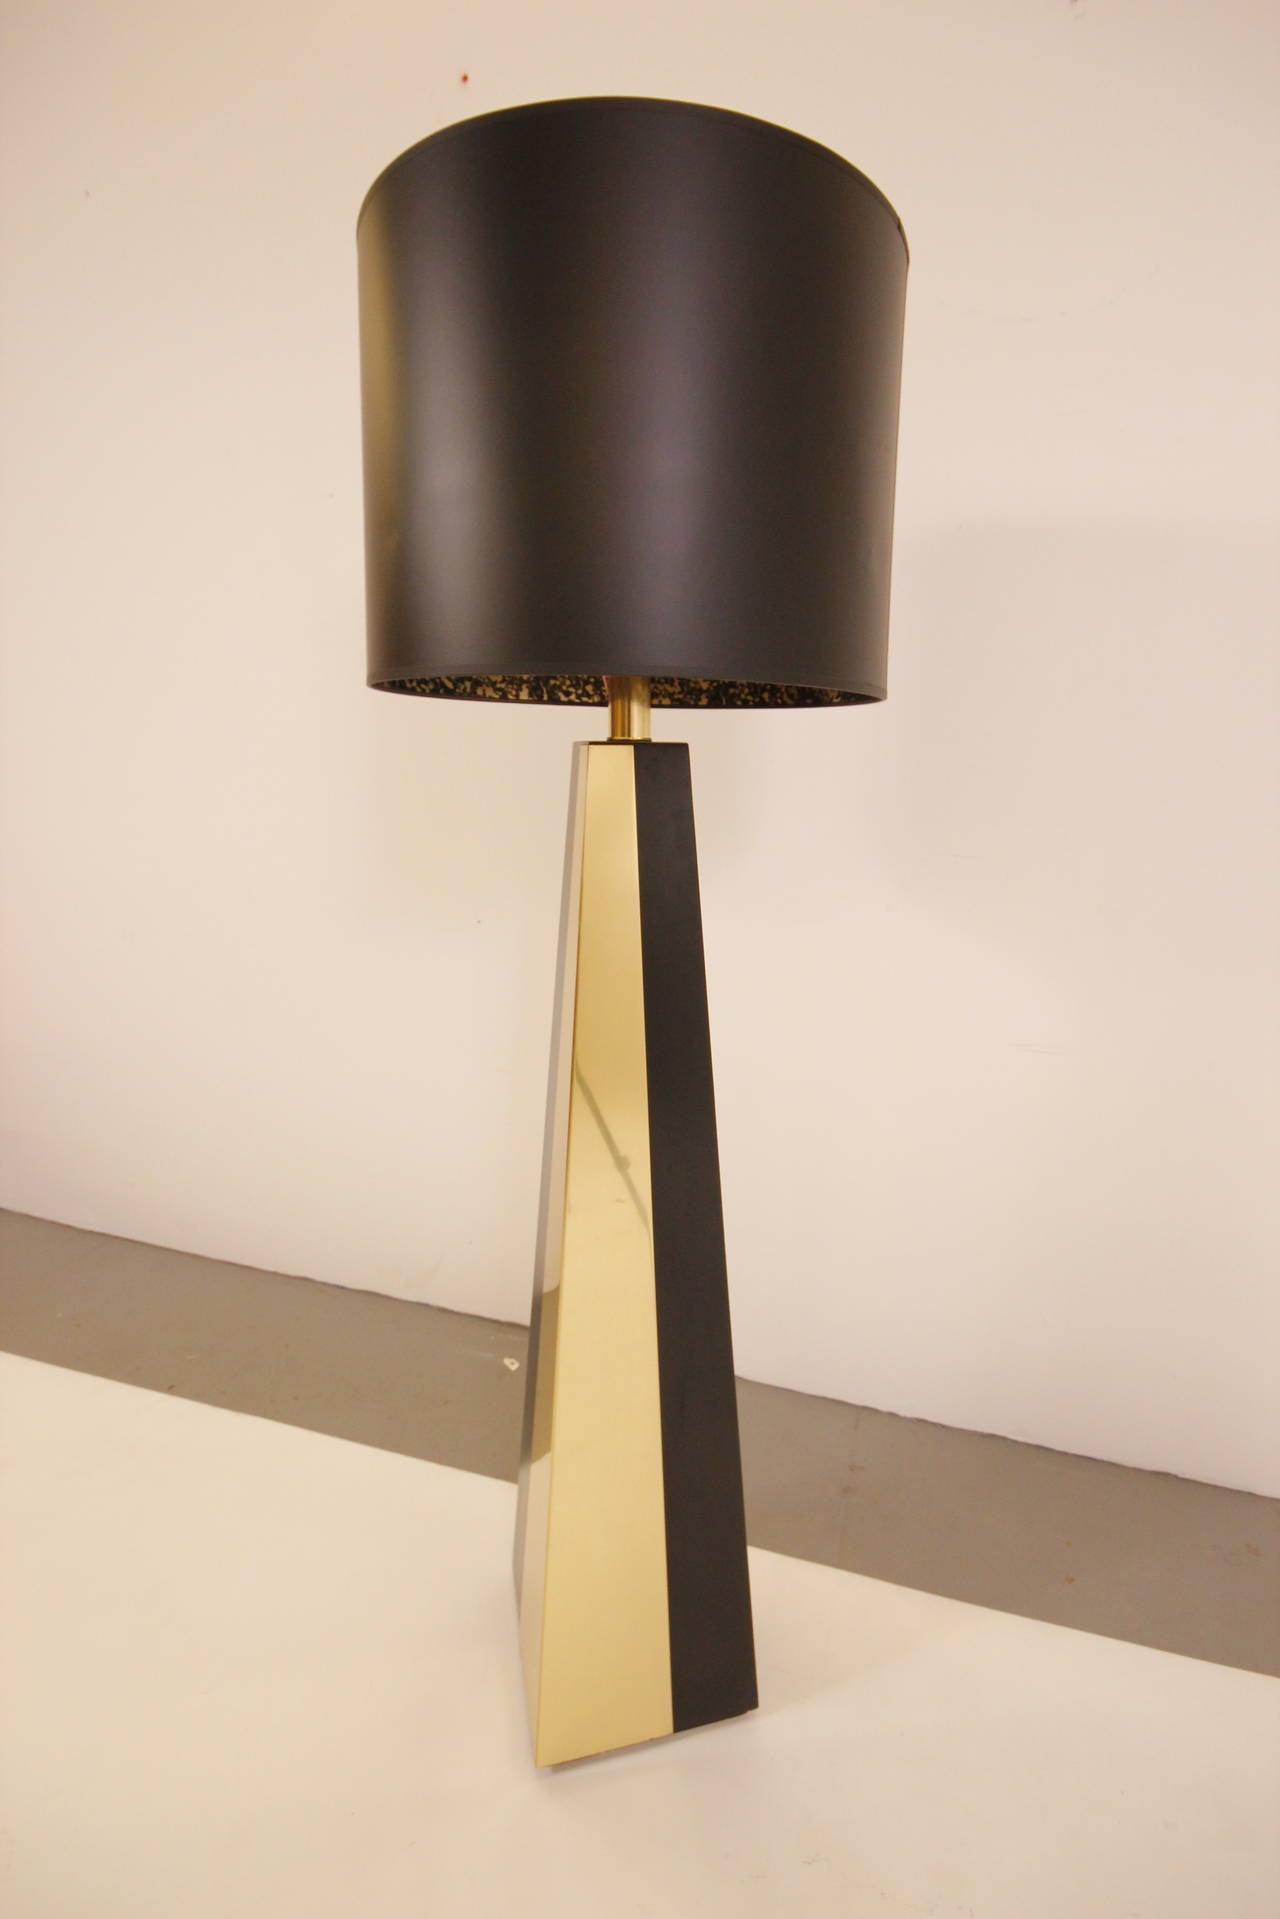 American Stunning Paul Evans Style Brass and Black Enamel Floor Lamp For Sale